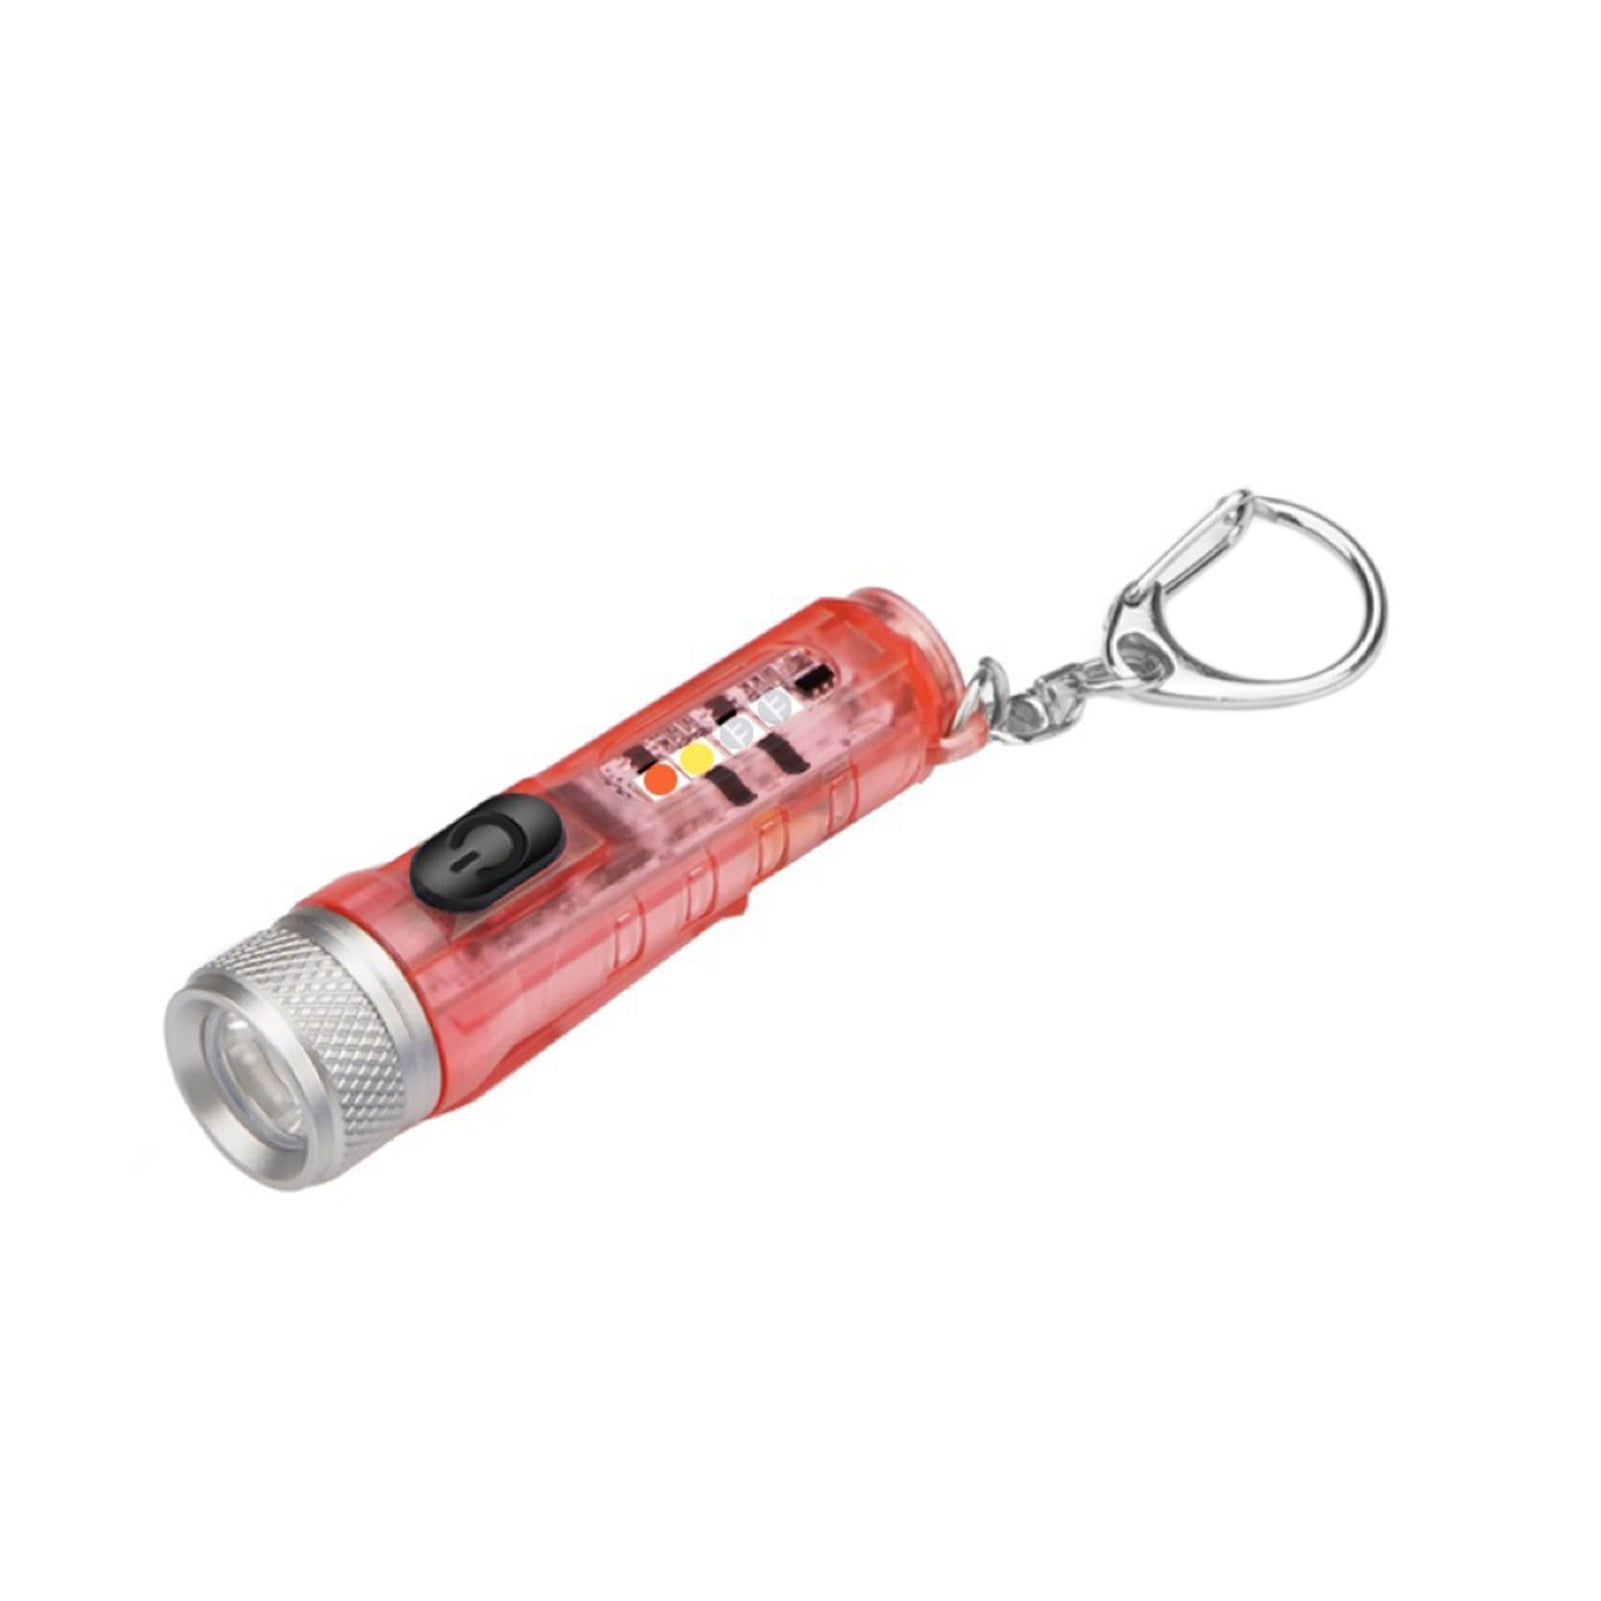 Emergency light test key set 7 x Emergency light test key & lanyard keyring 